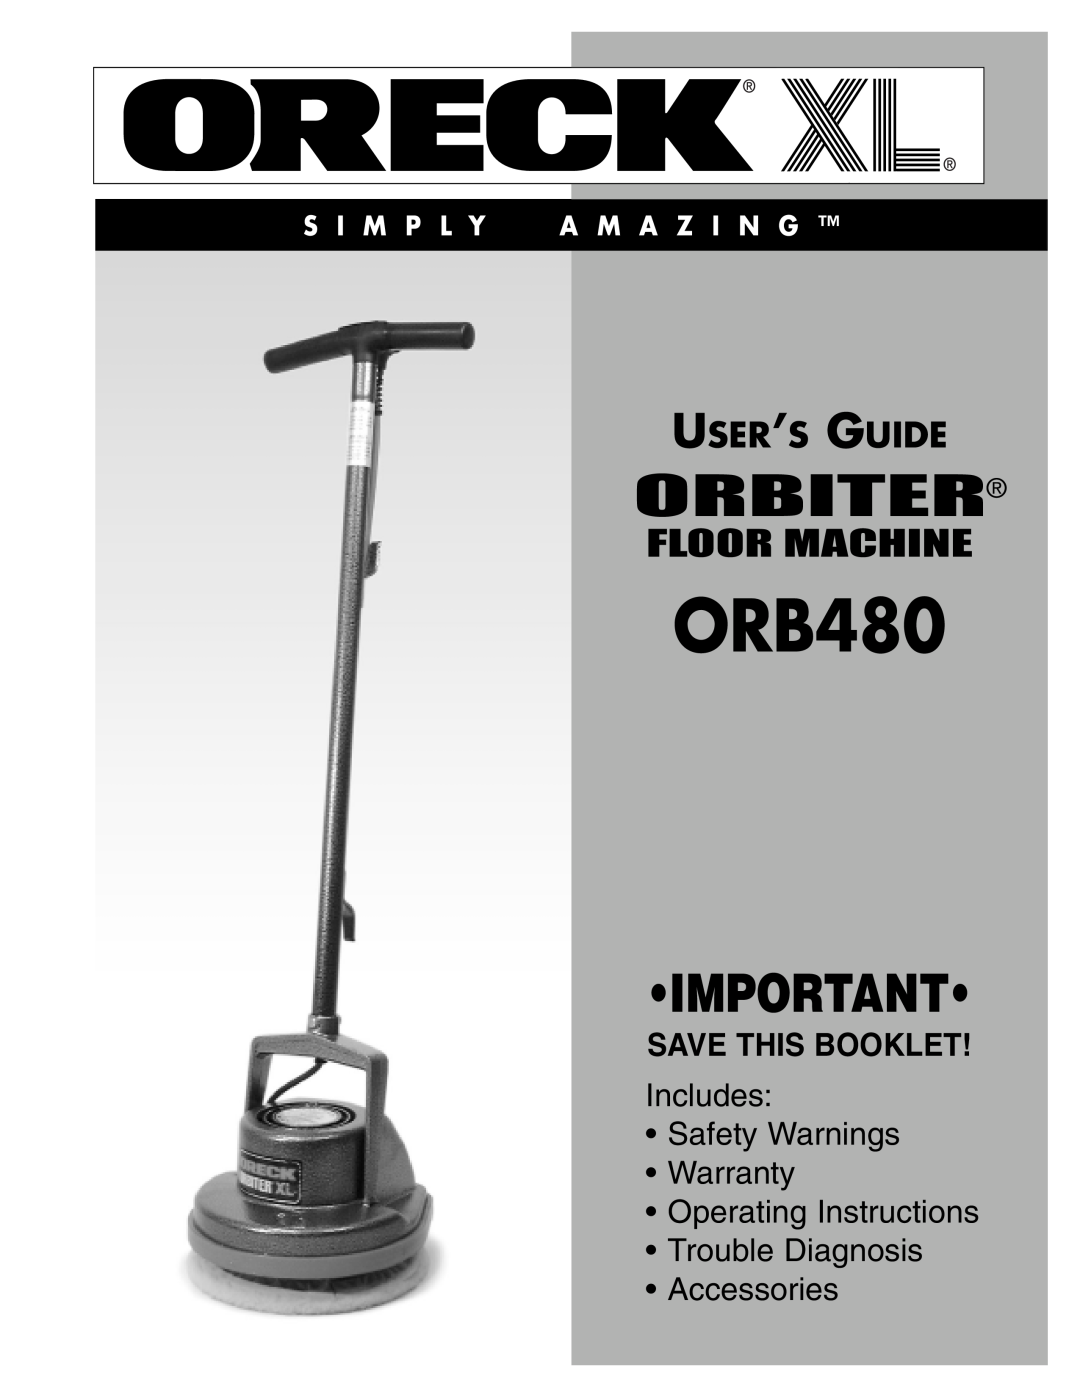 Oreck ORB480 warranty User’S Guide, S I M P L Y A M A Z I N G, Orbiter, Floor Machine, Save This Booklet, Accessories 